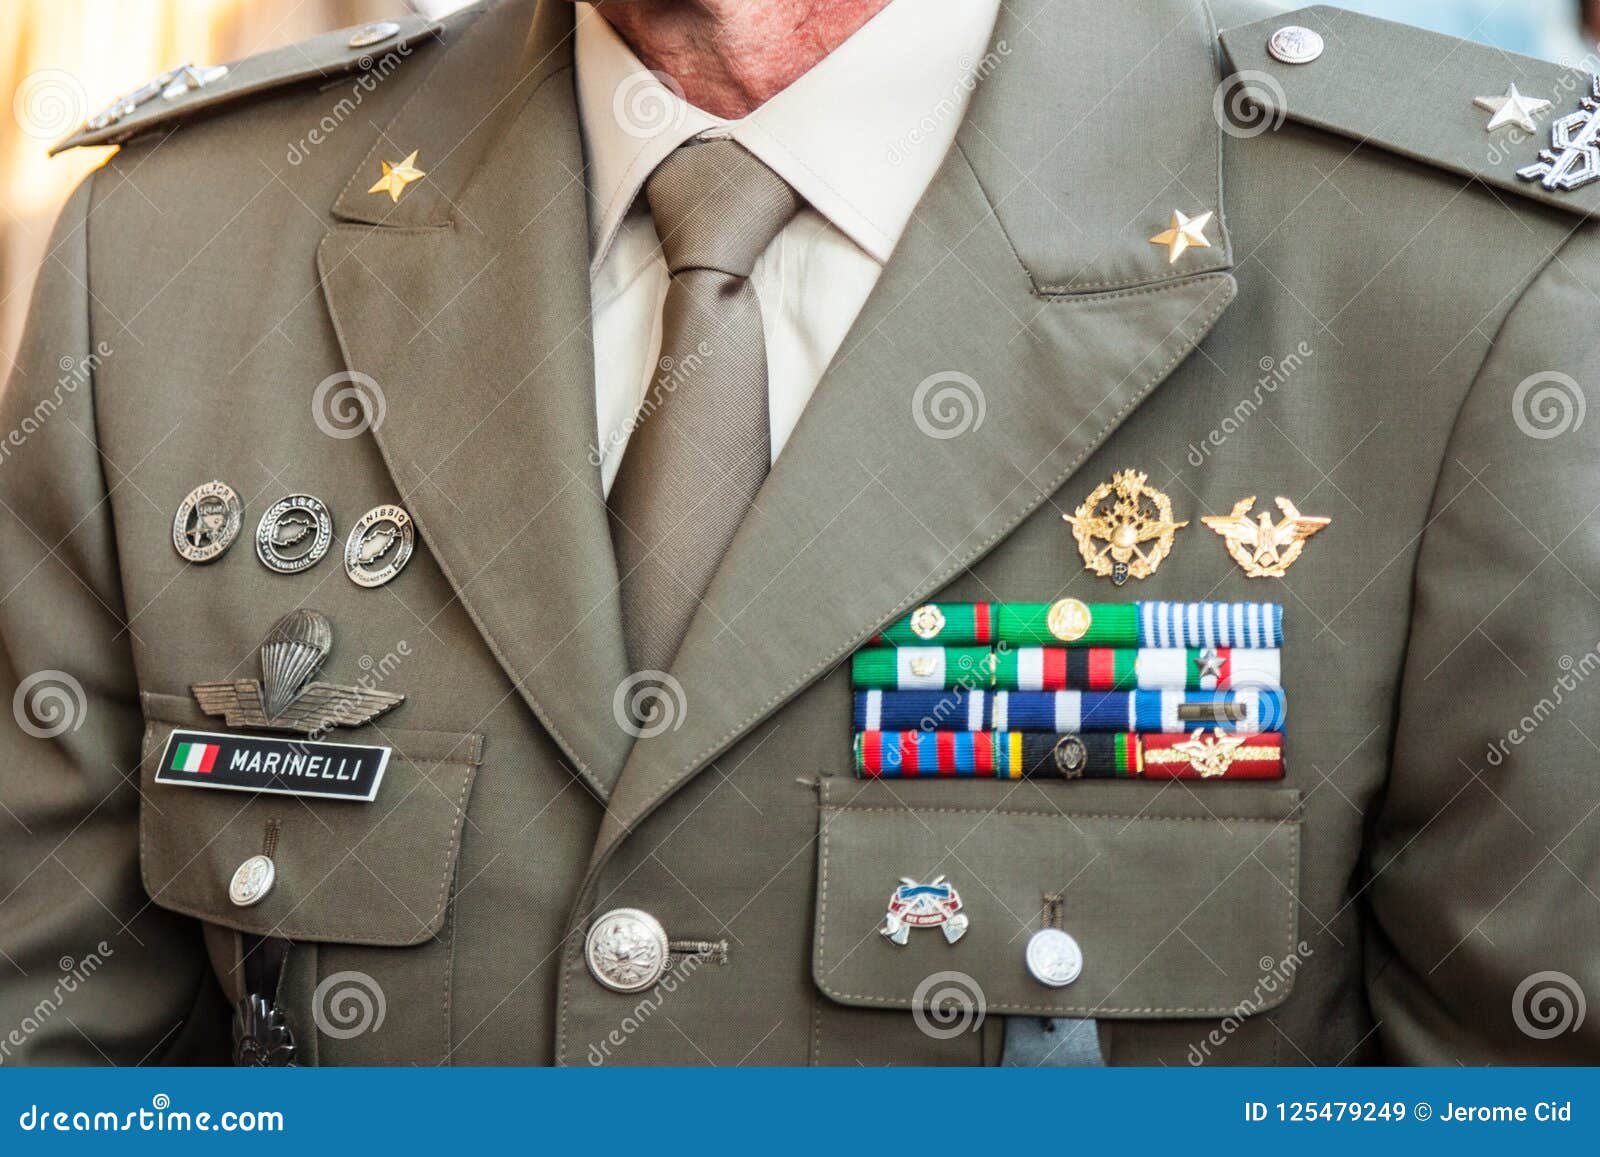 Italian Army Officer Uniform - Army Military